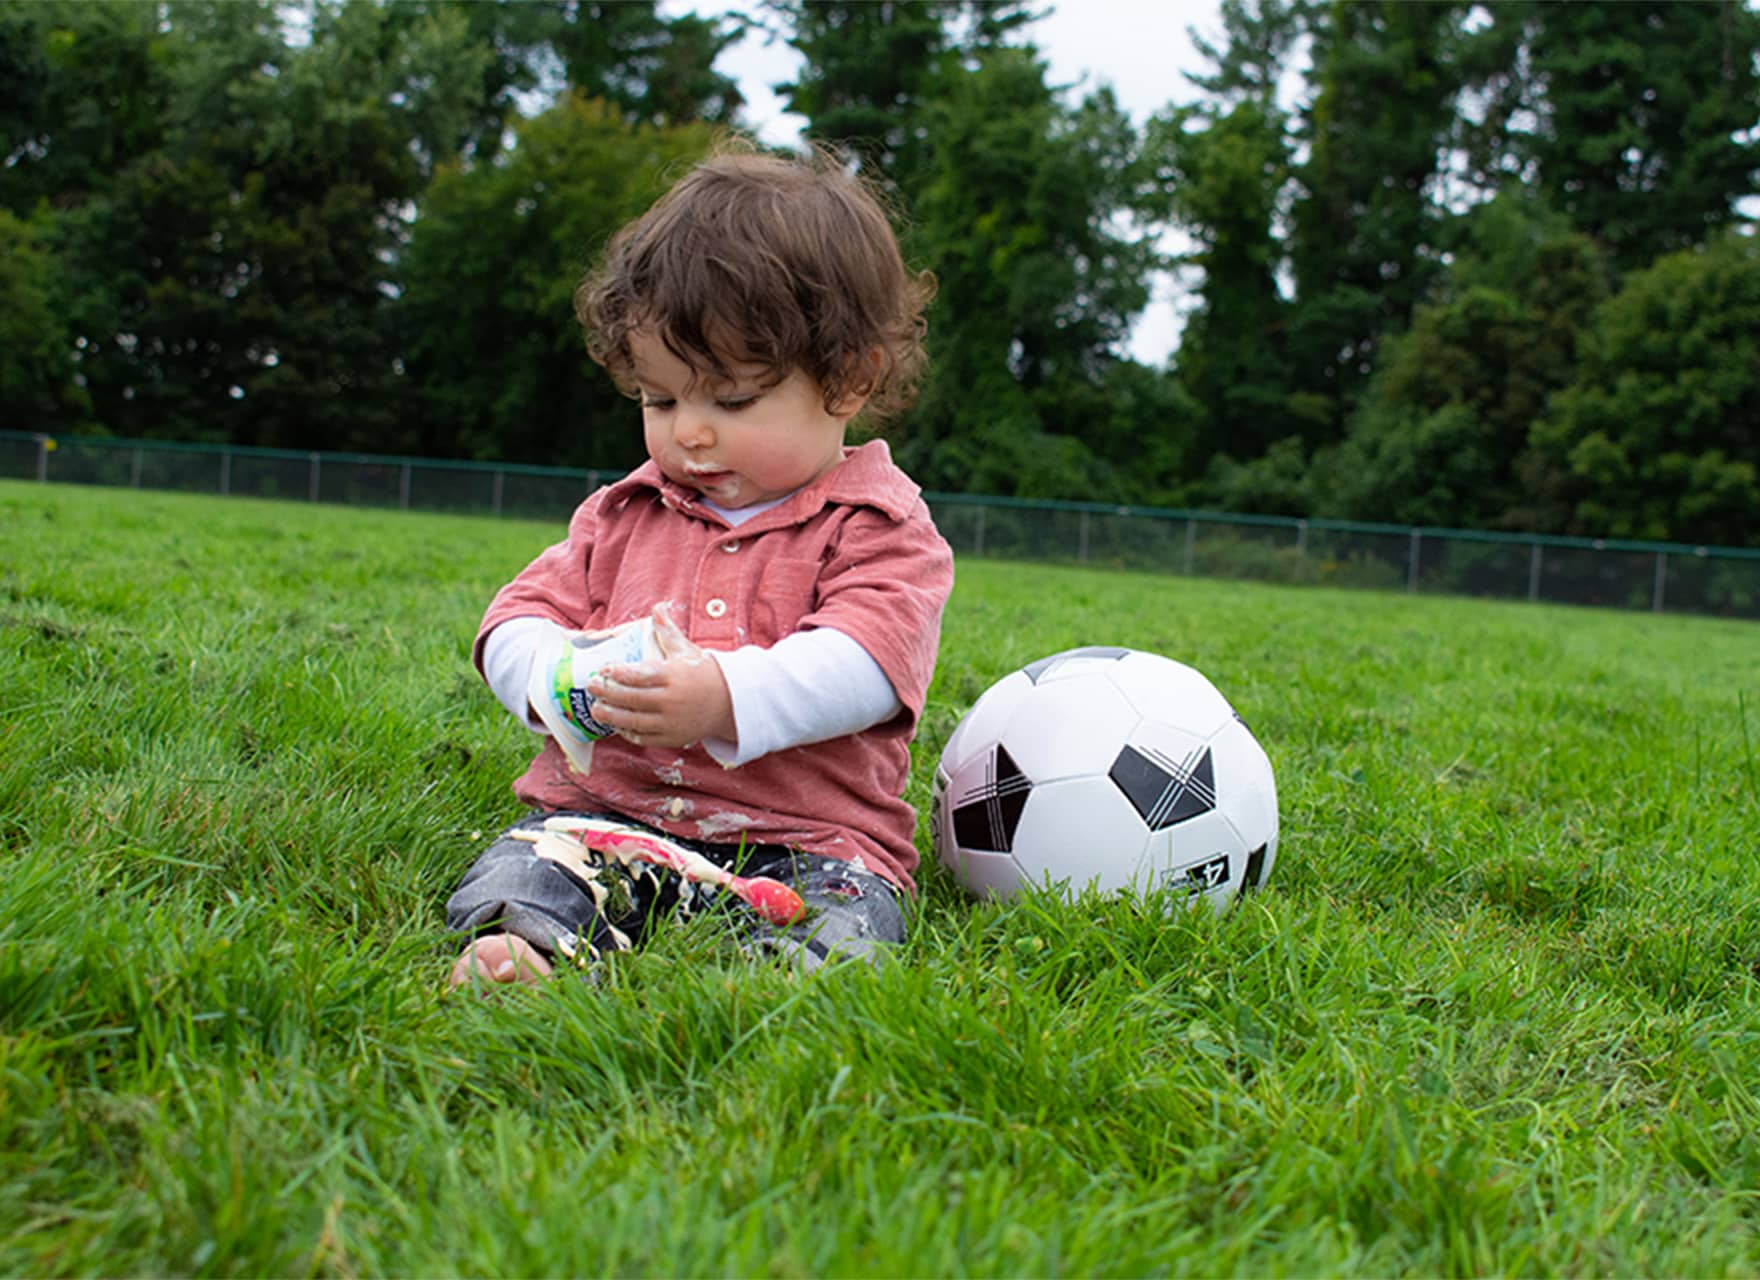 Child sitting on a soccer field eating Stonyfield Organic yogurt